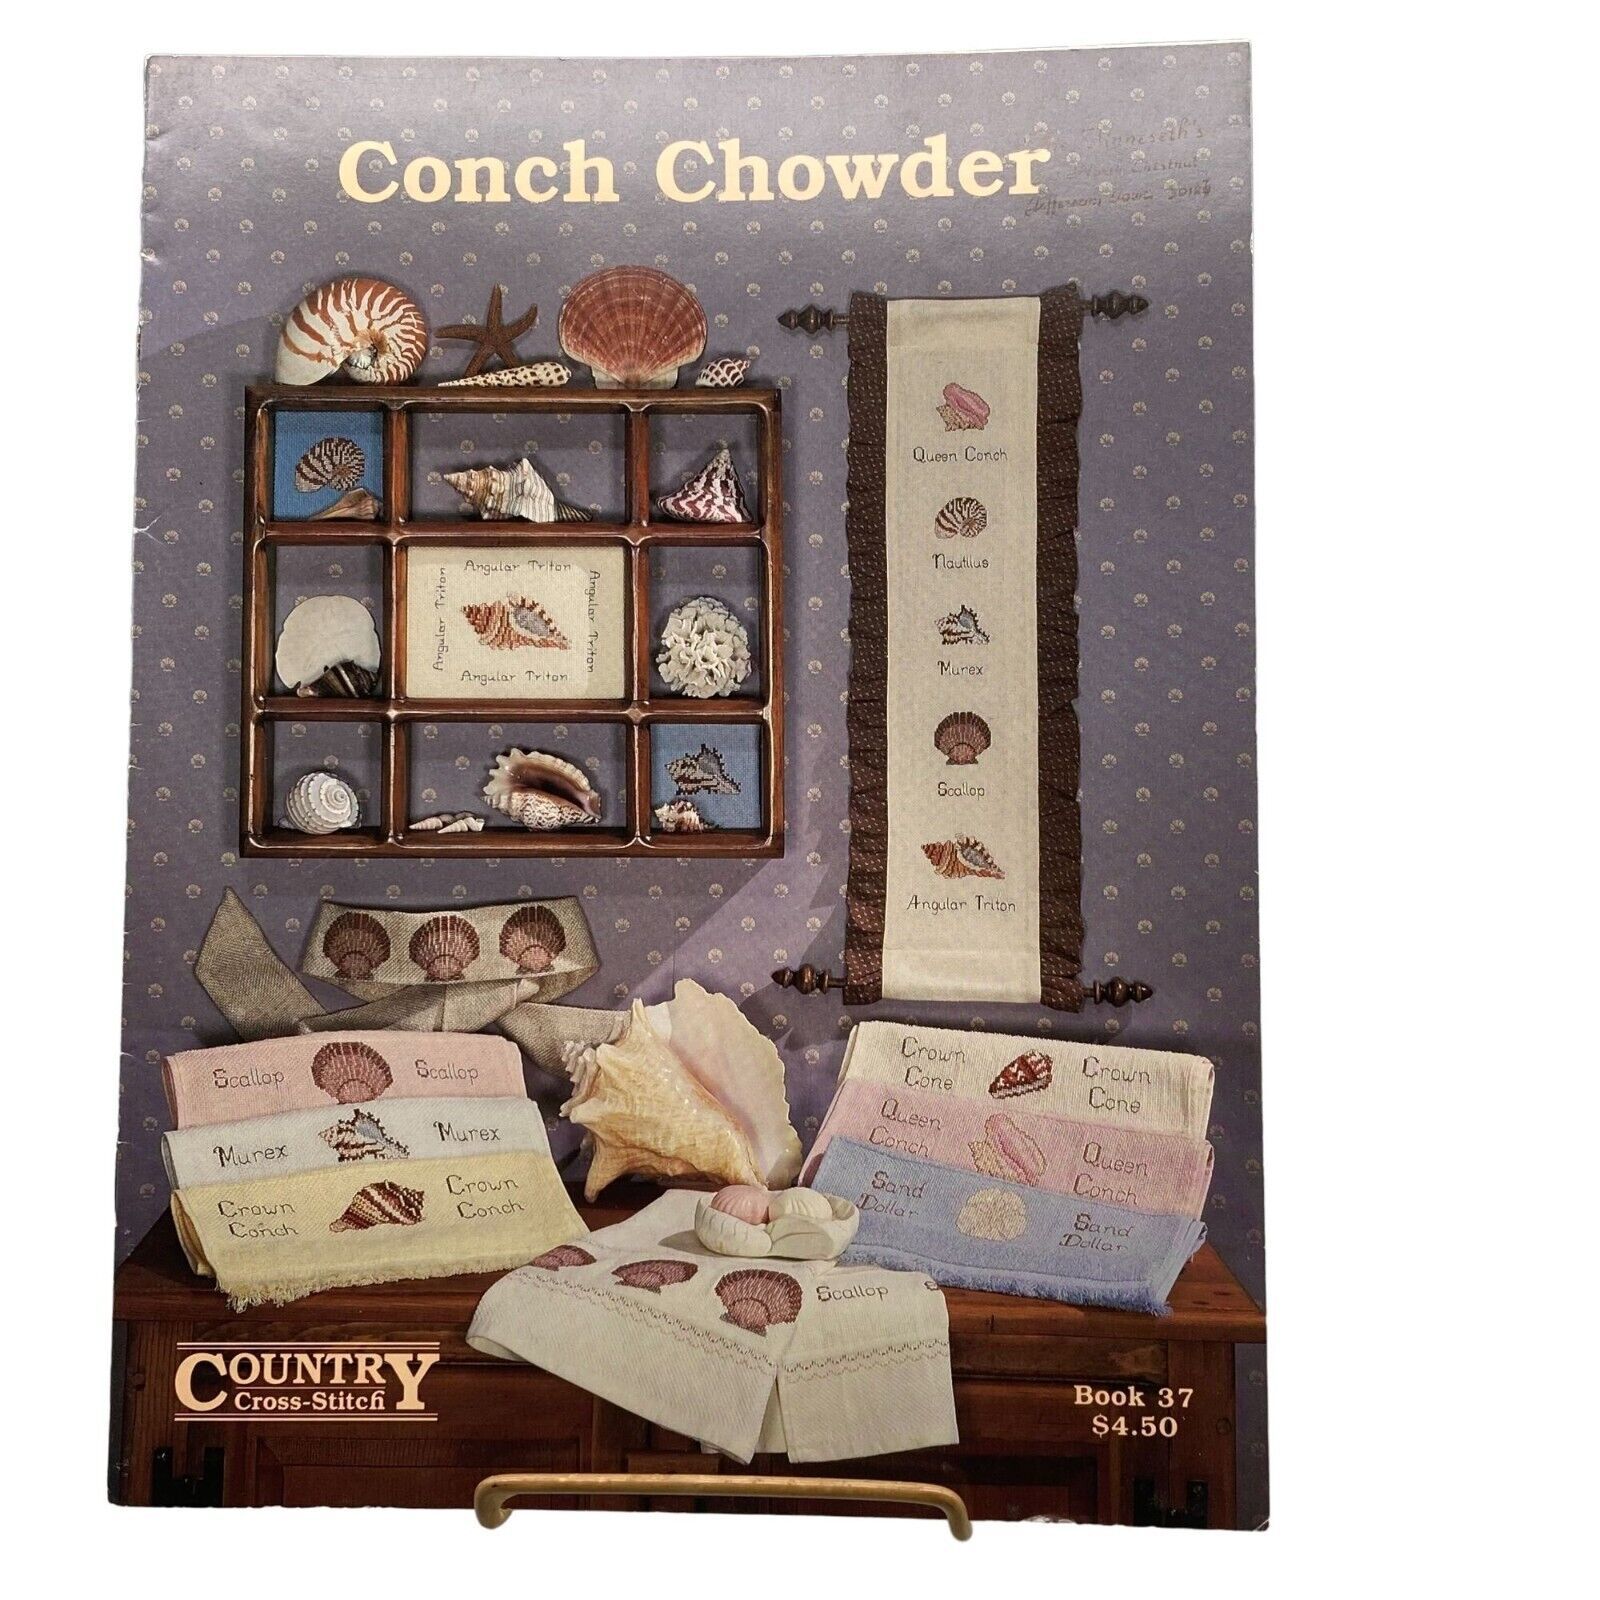 Vintage Cross Stitch Patterns, Conch Chowder, 1986 Country Cross-Stitch Book 37 - $7.85